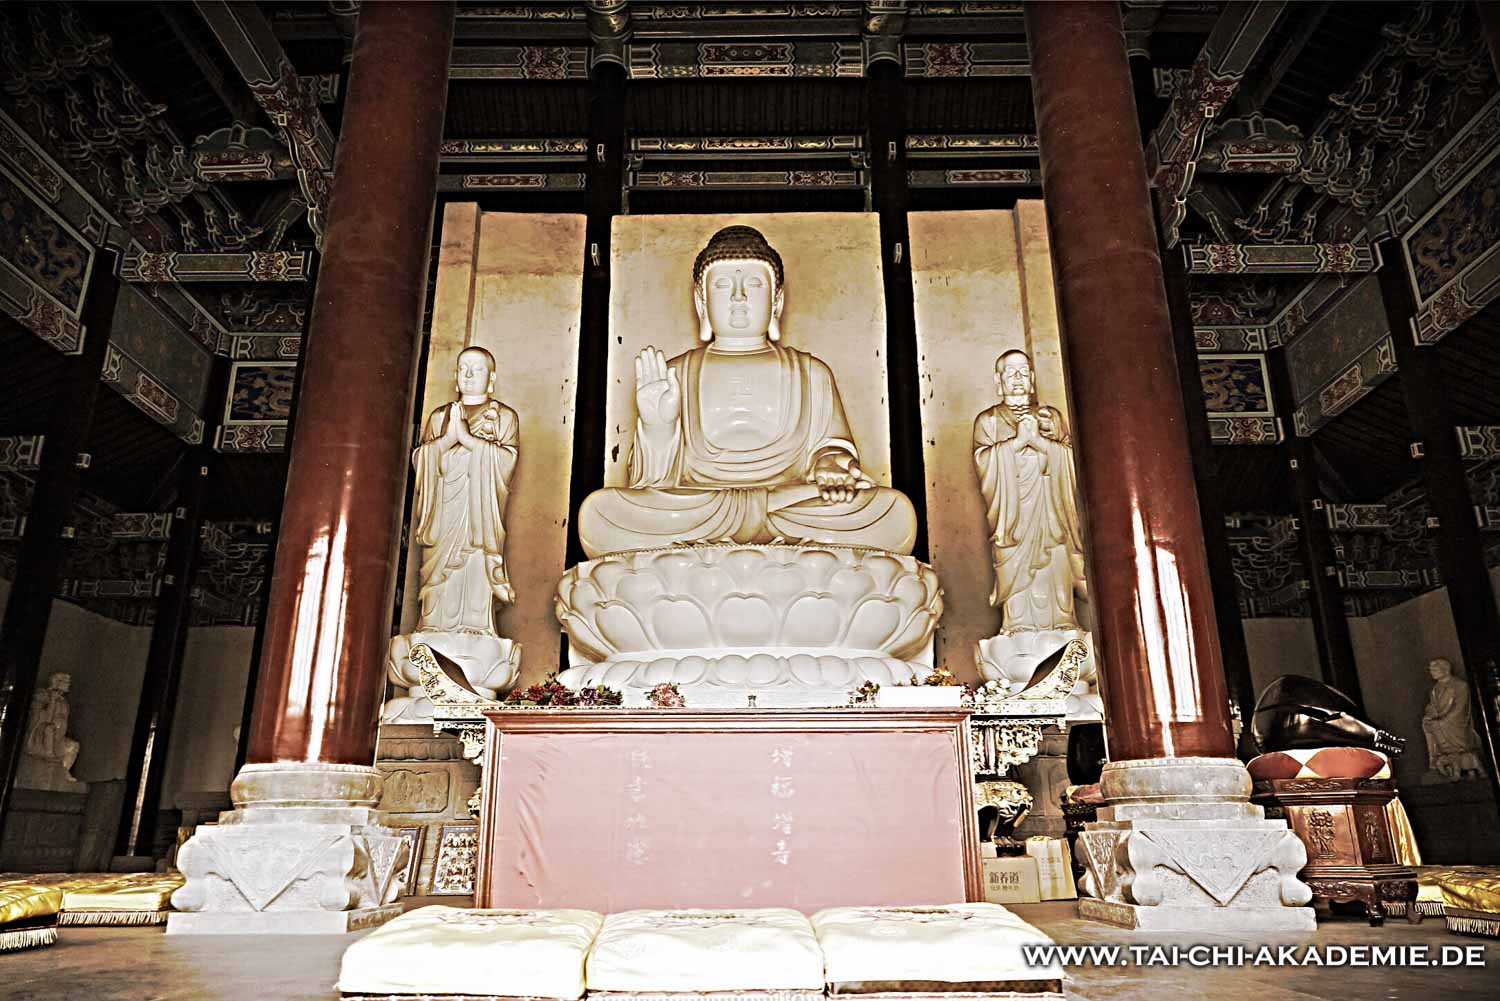 Die Buddhahalle des Shui Yu Tempels in China.